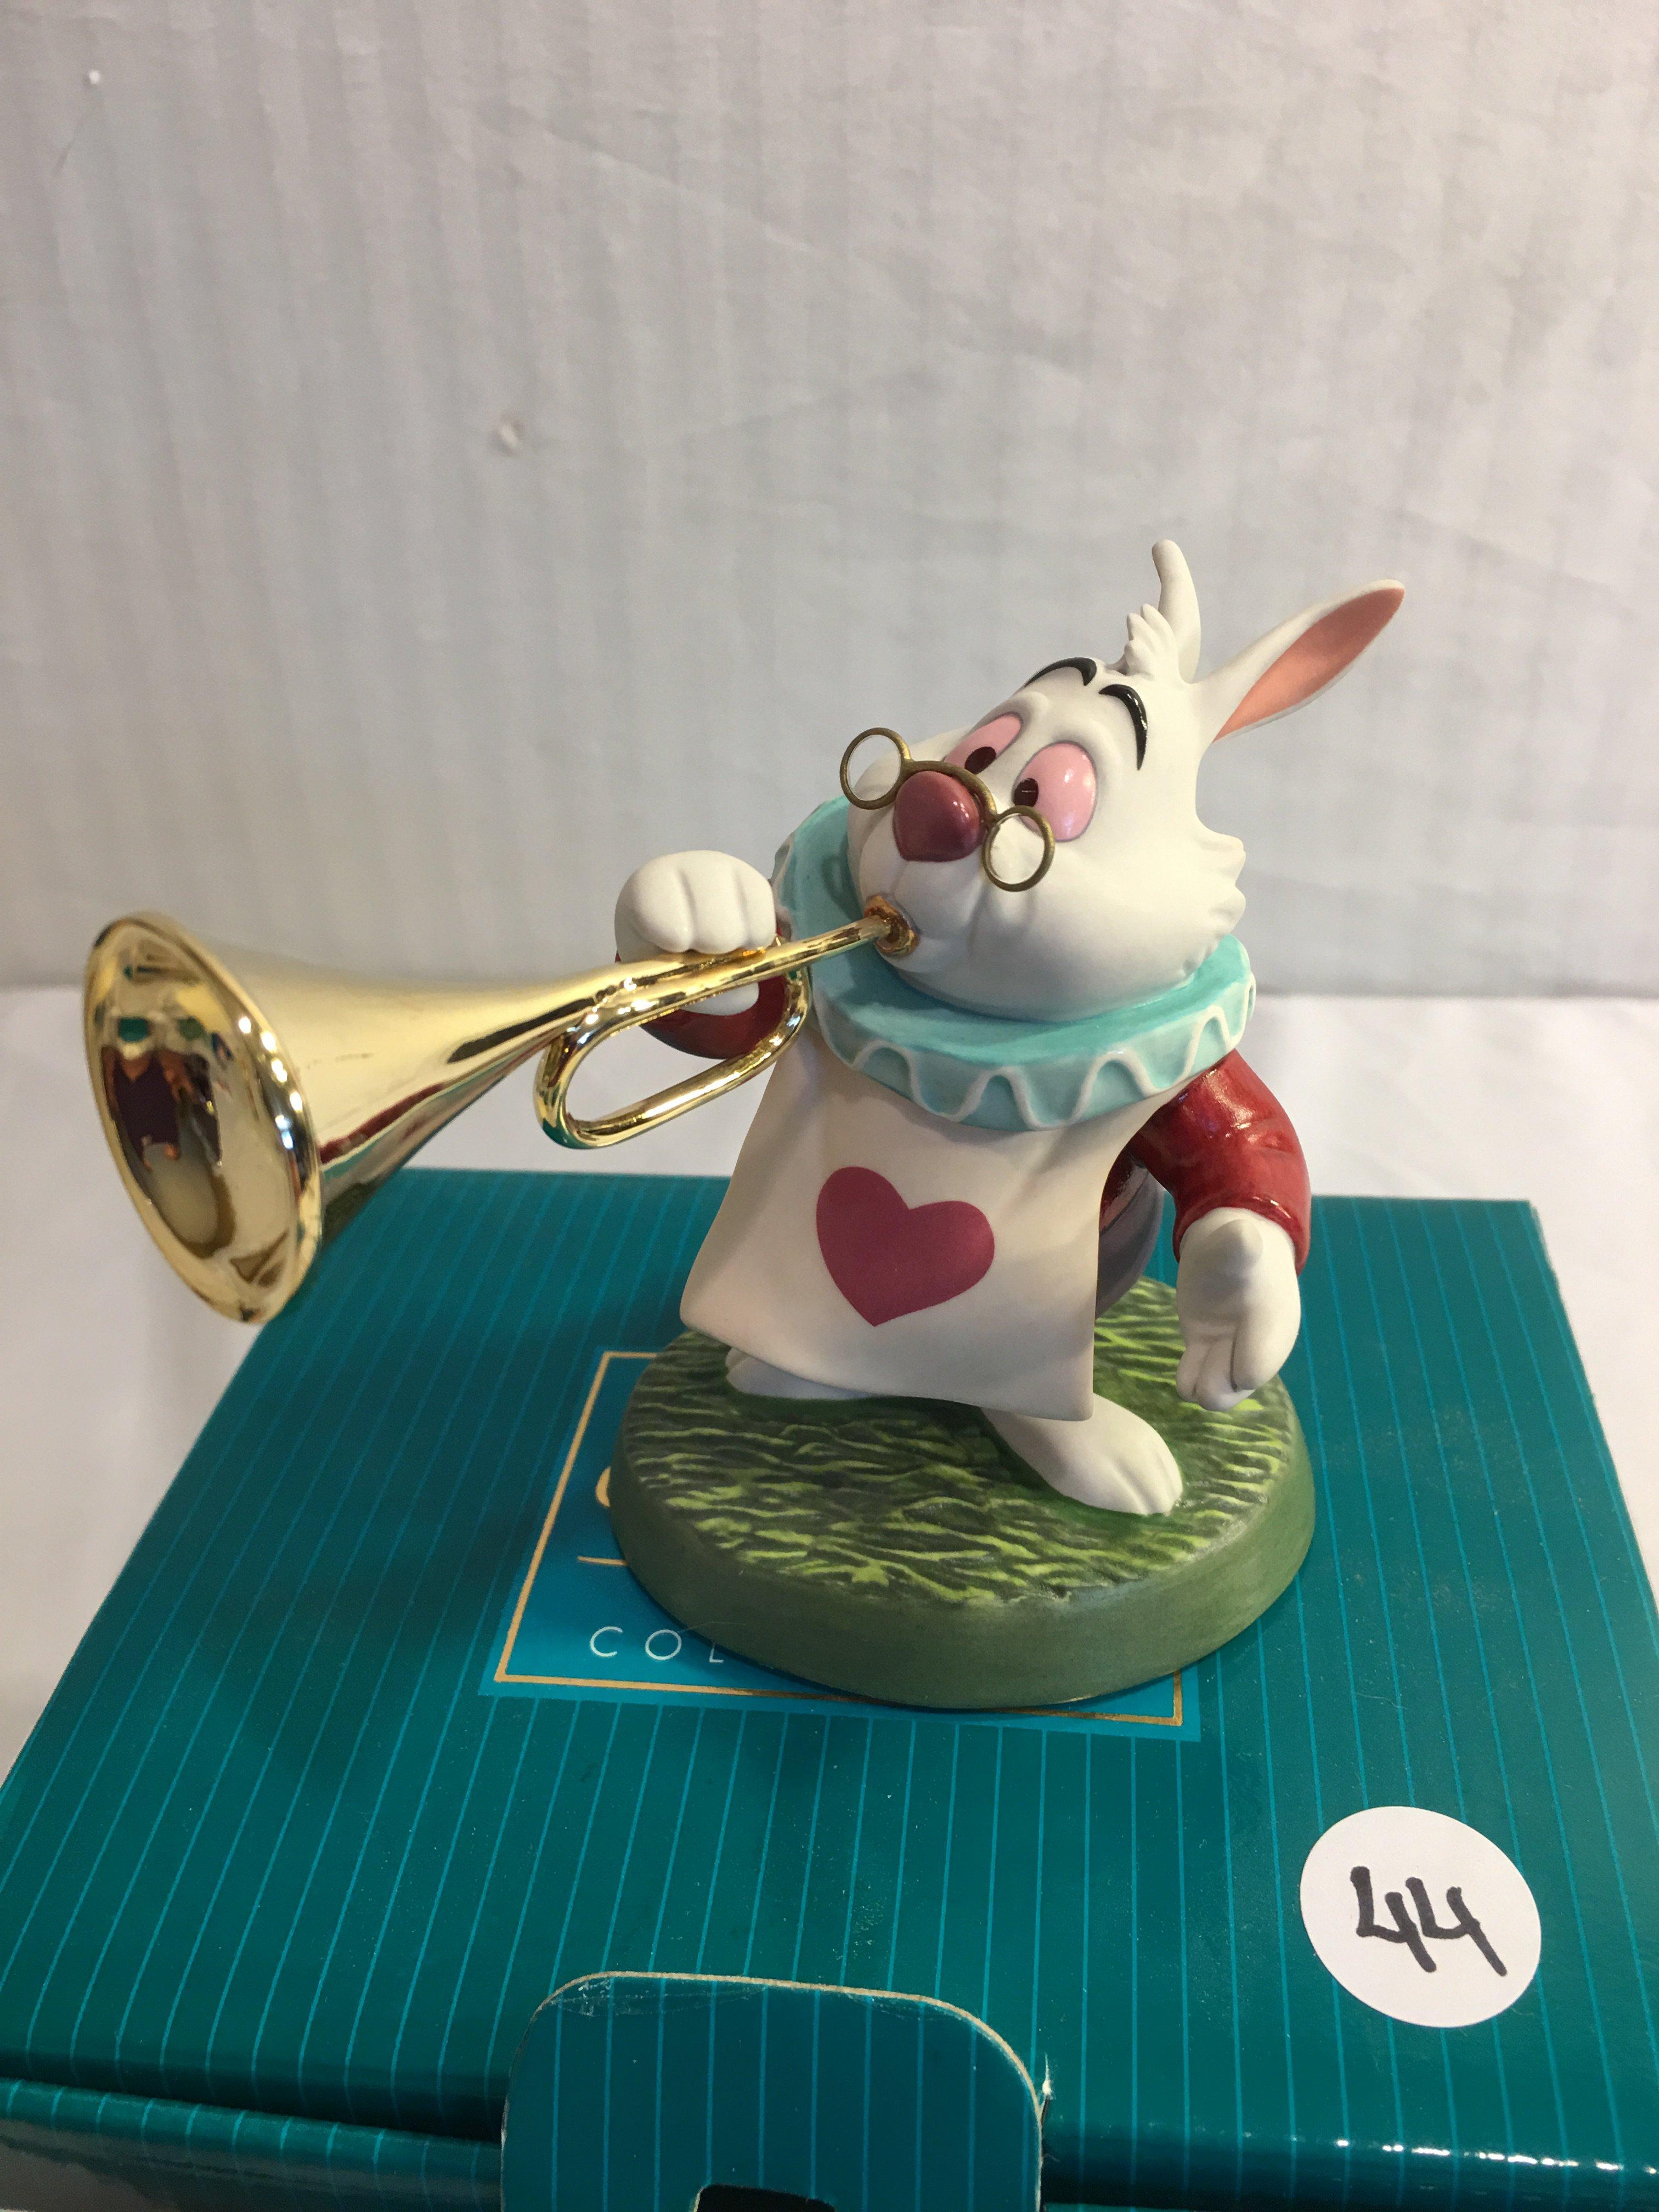 Collector Classics Walt Disney Collection "White Rabbit Le Lapin Blanc "White Rabbit" 4.5x6"